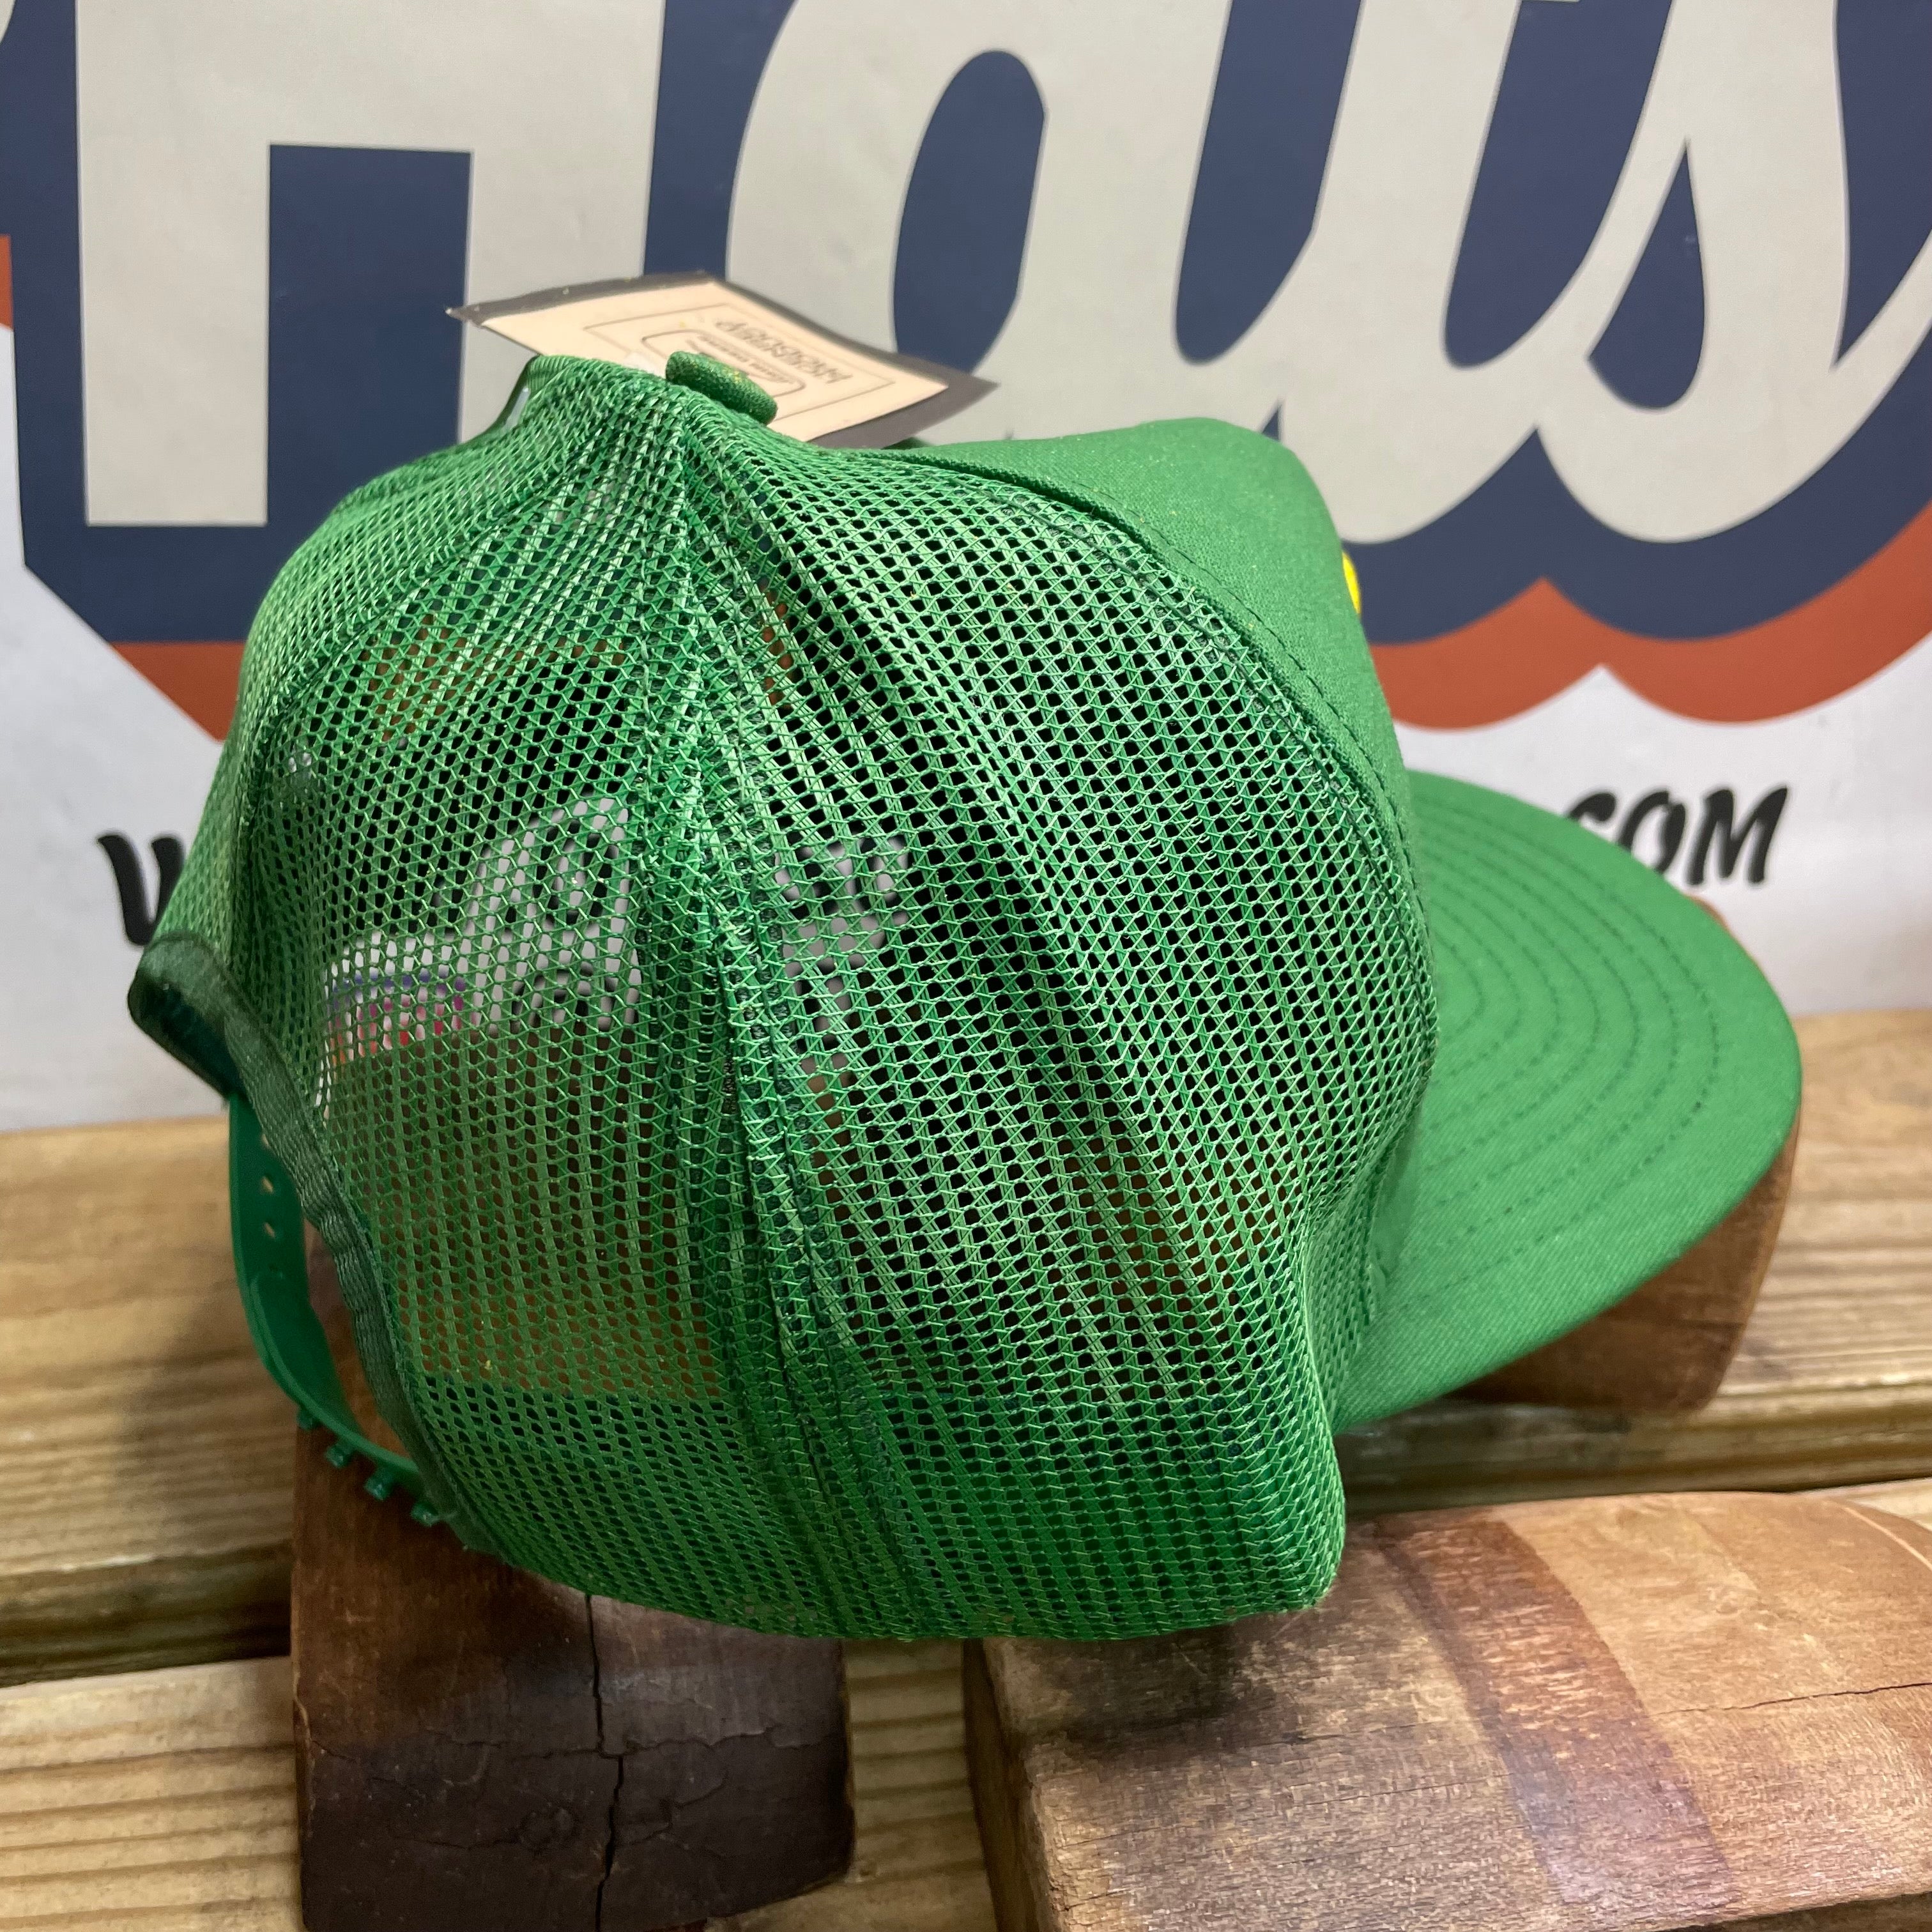 John Deere Adults Green Vintage Mesh Back Baseball Cap